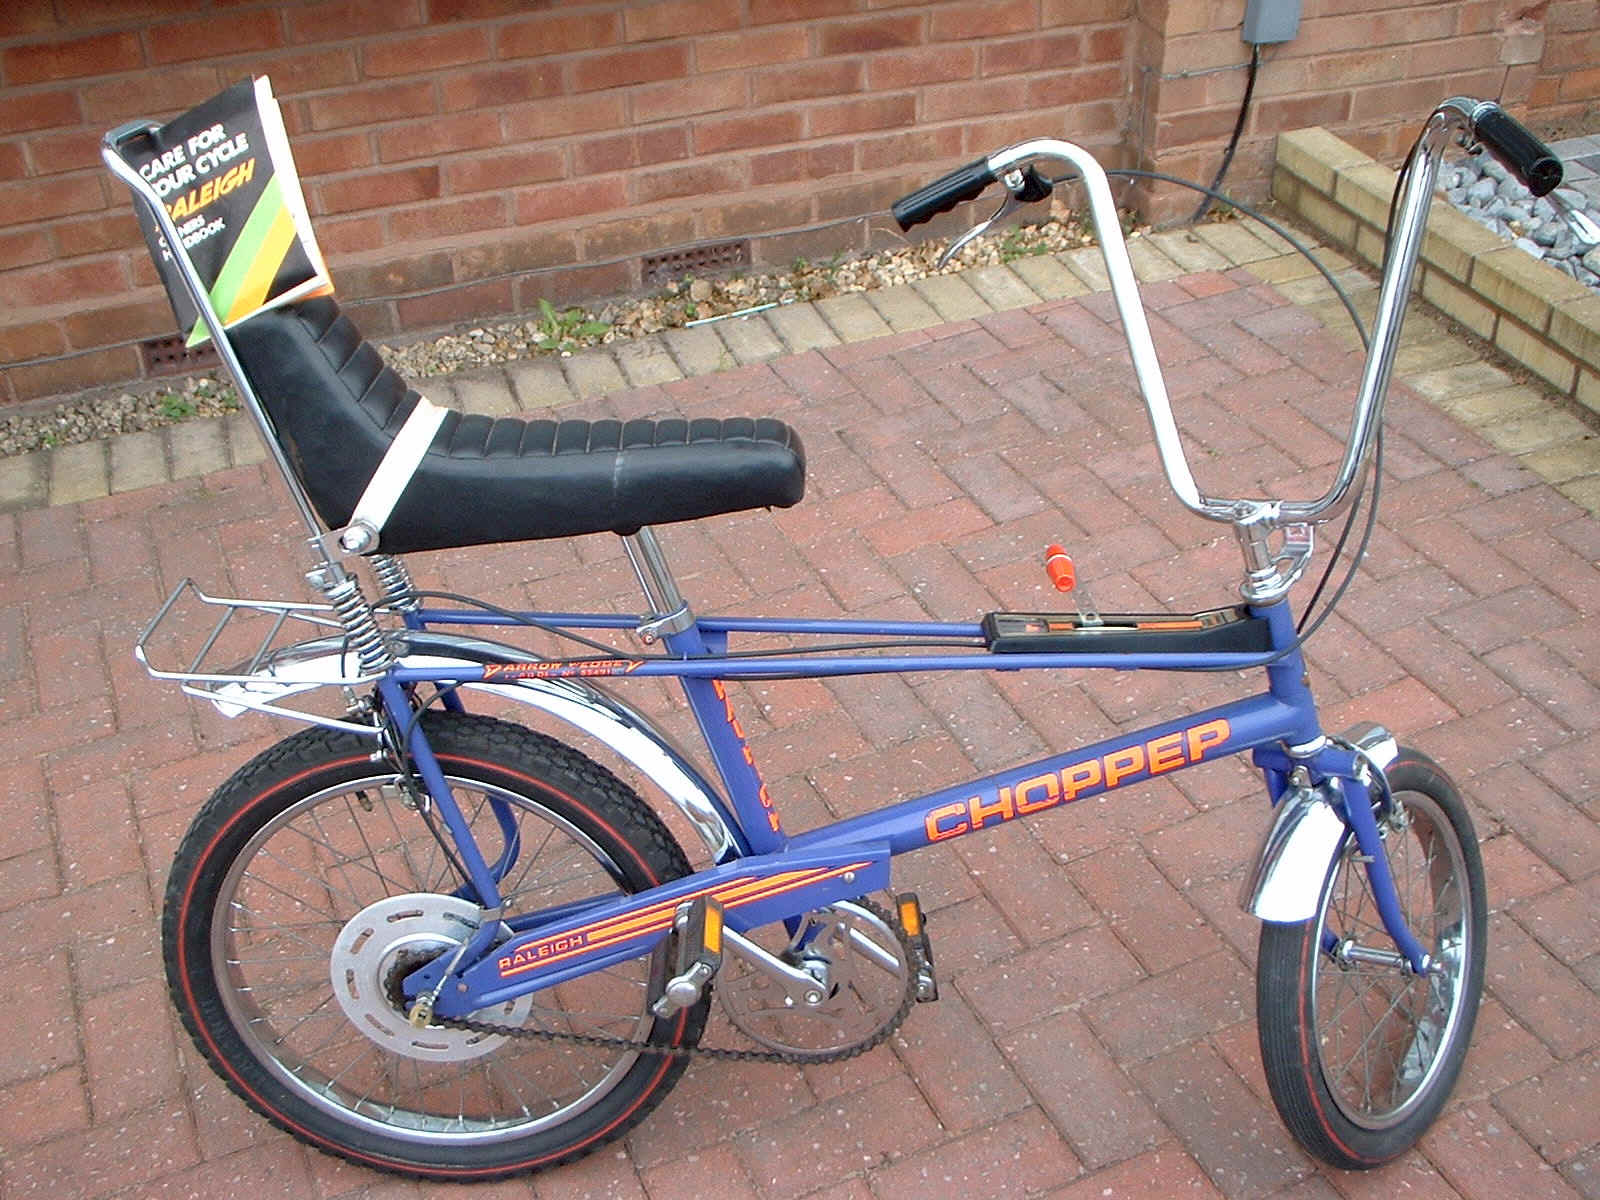 1980 chopper bicycle